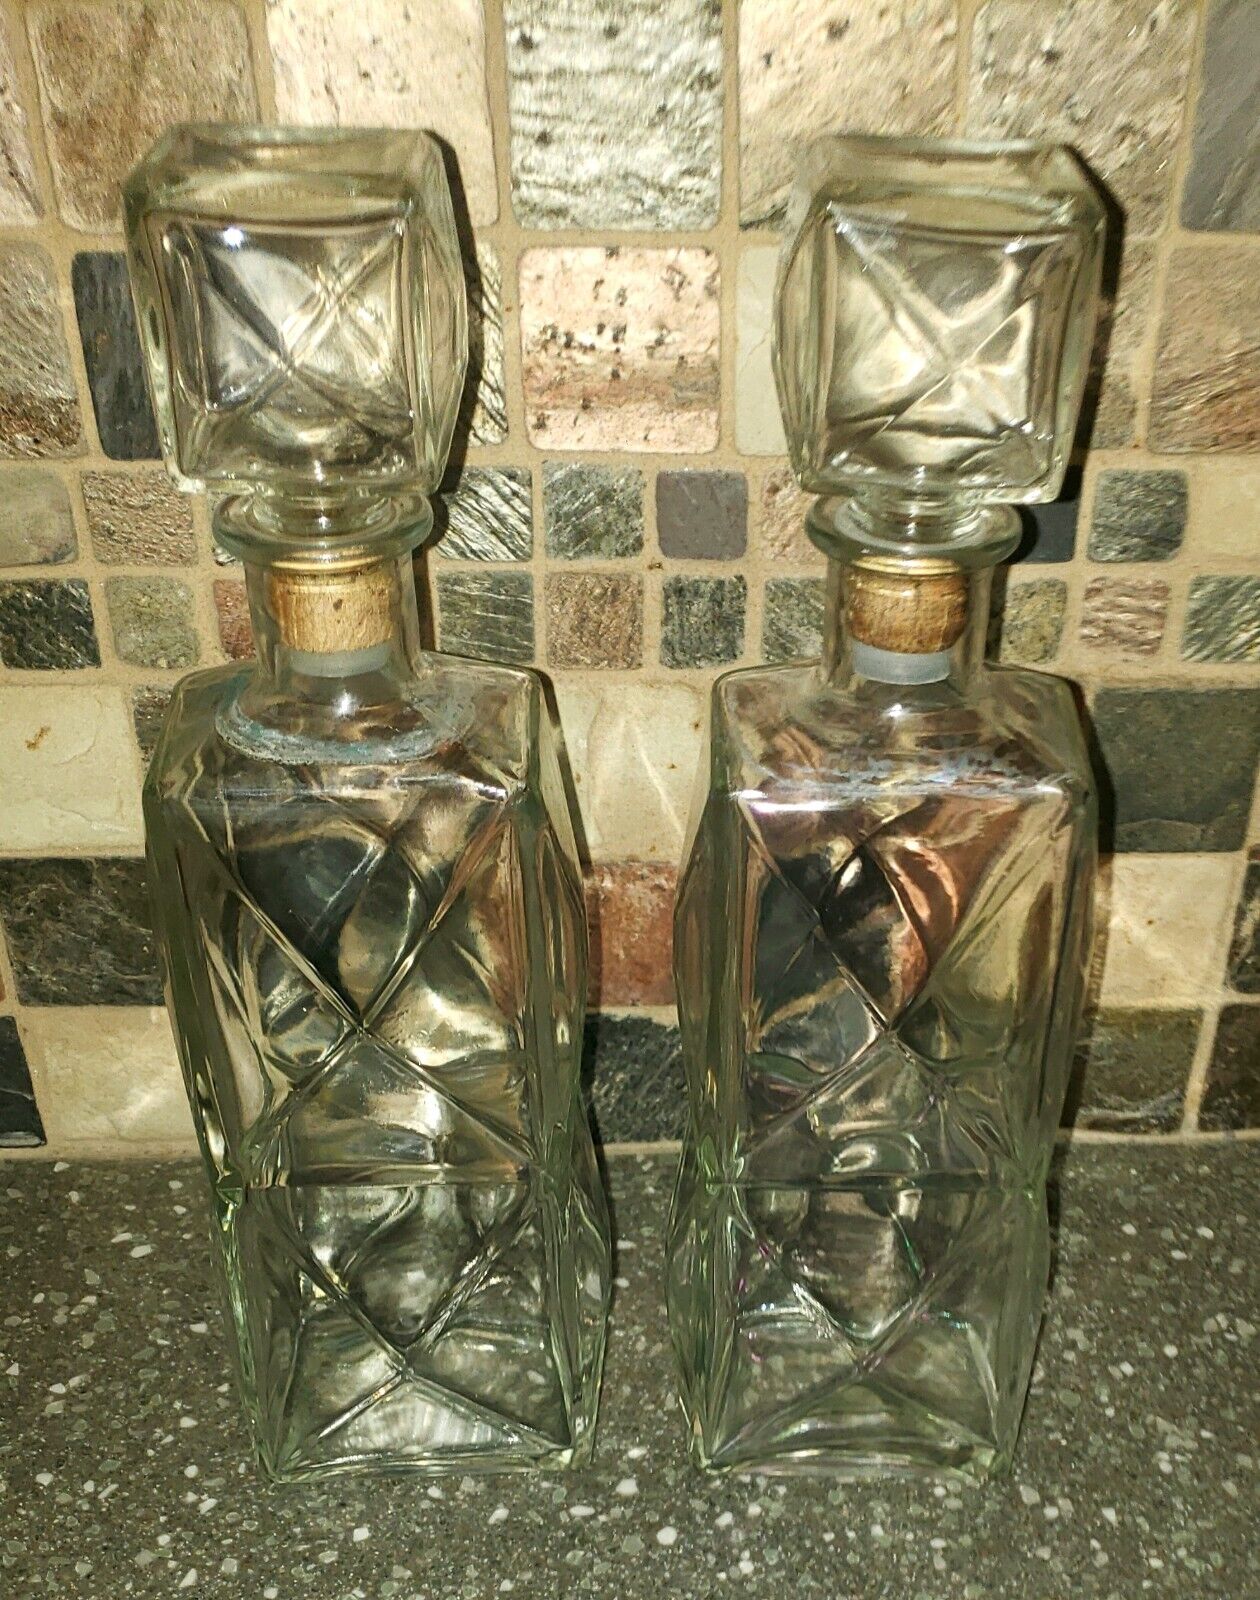 2 Vintage Liquor Glass Bottles Decanters with Cork Stoppers (Liquor Bottles)